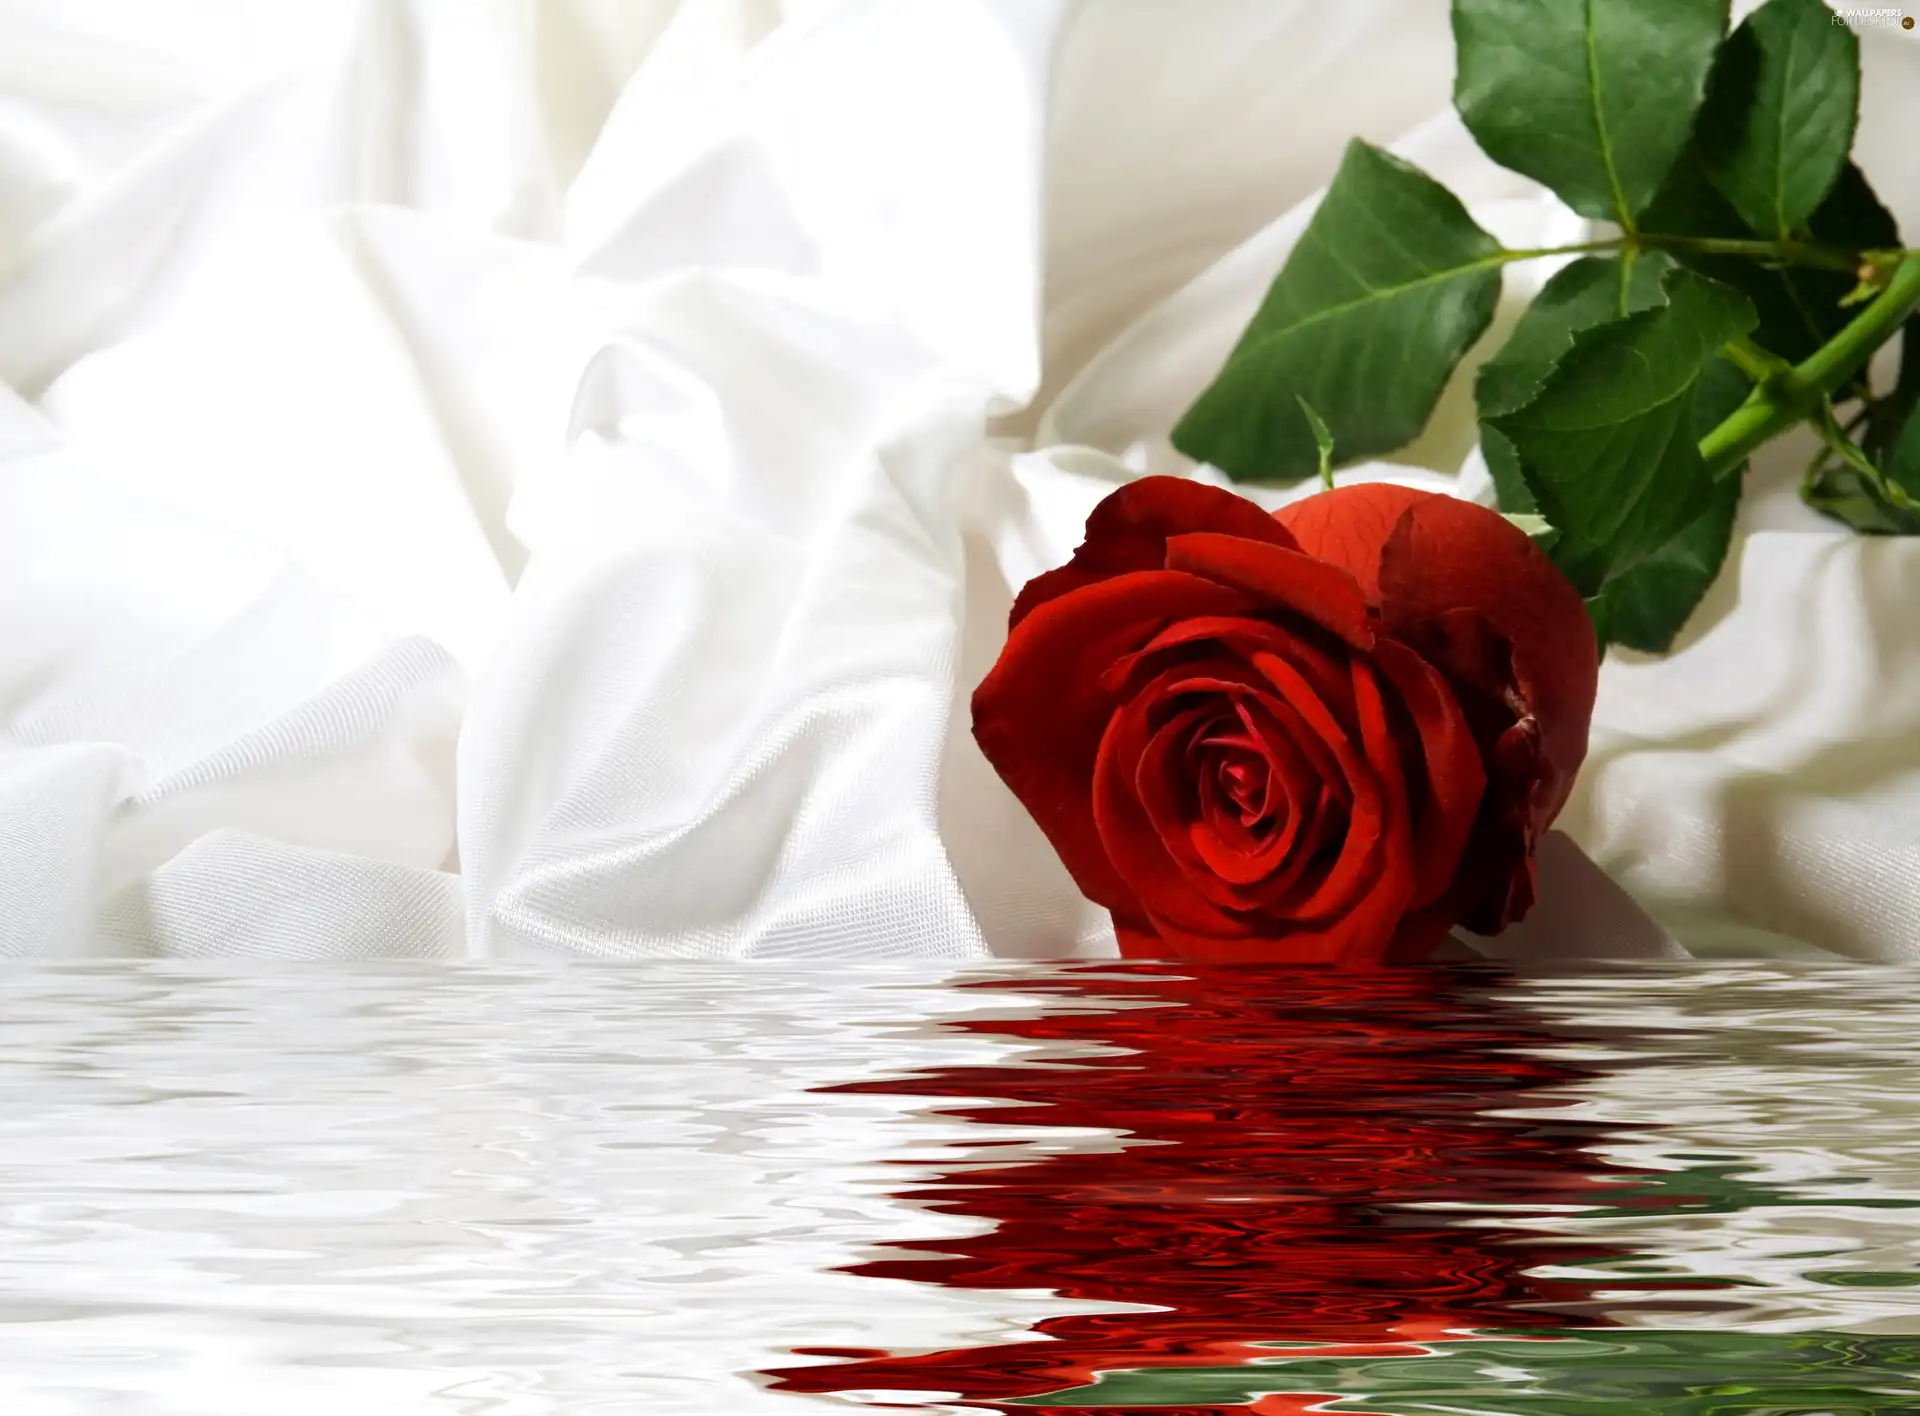 rose, water, textile